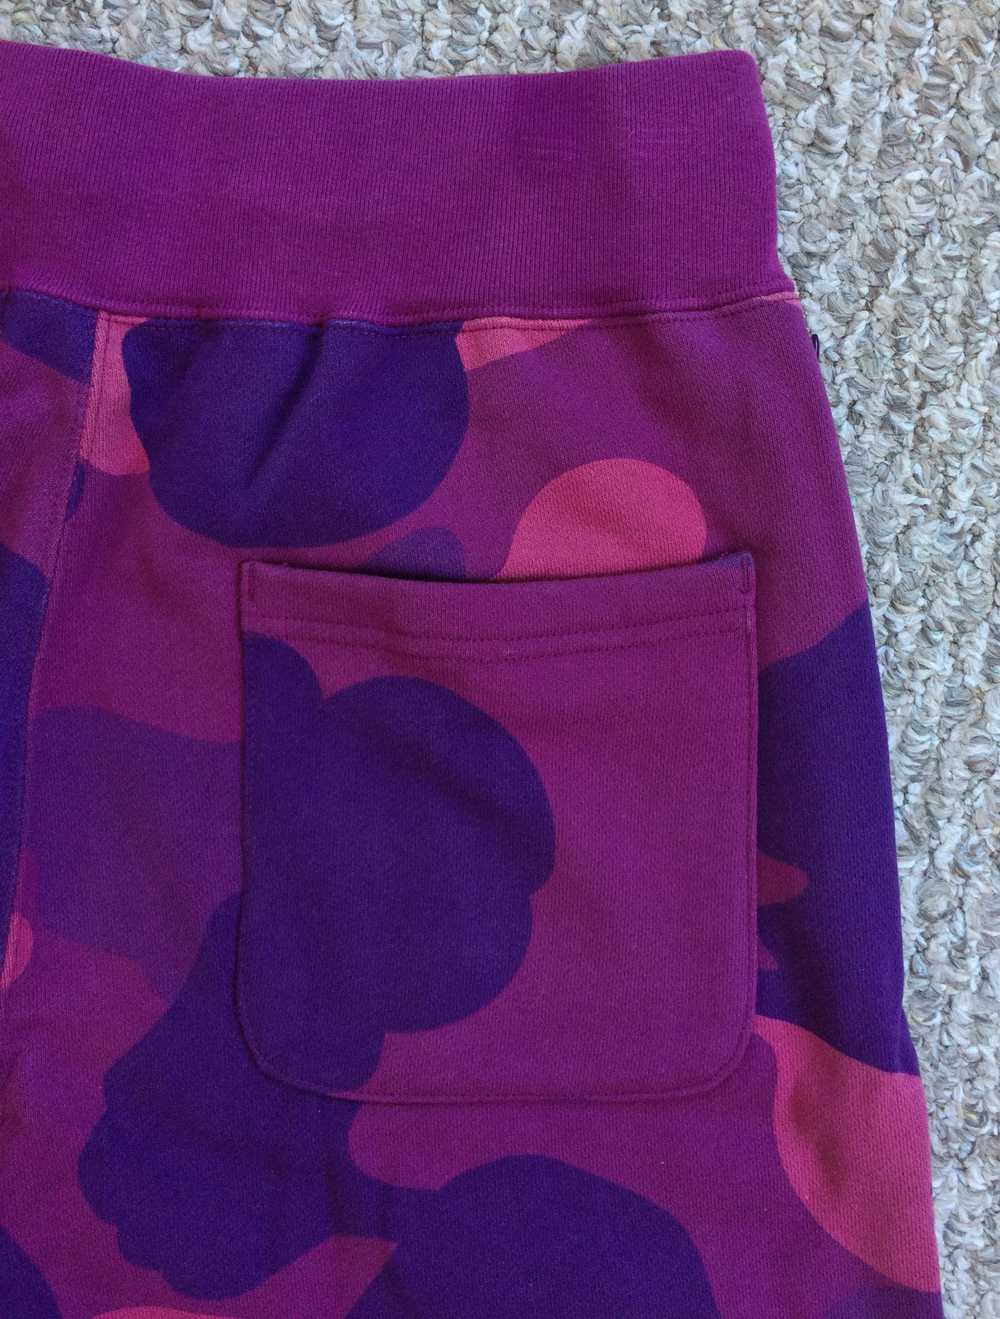 Bape Bape Purple Camo Sweat Shorts - image 7